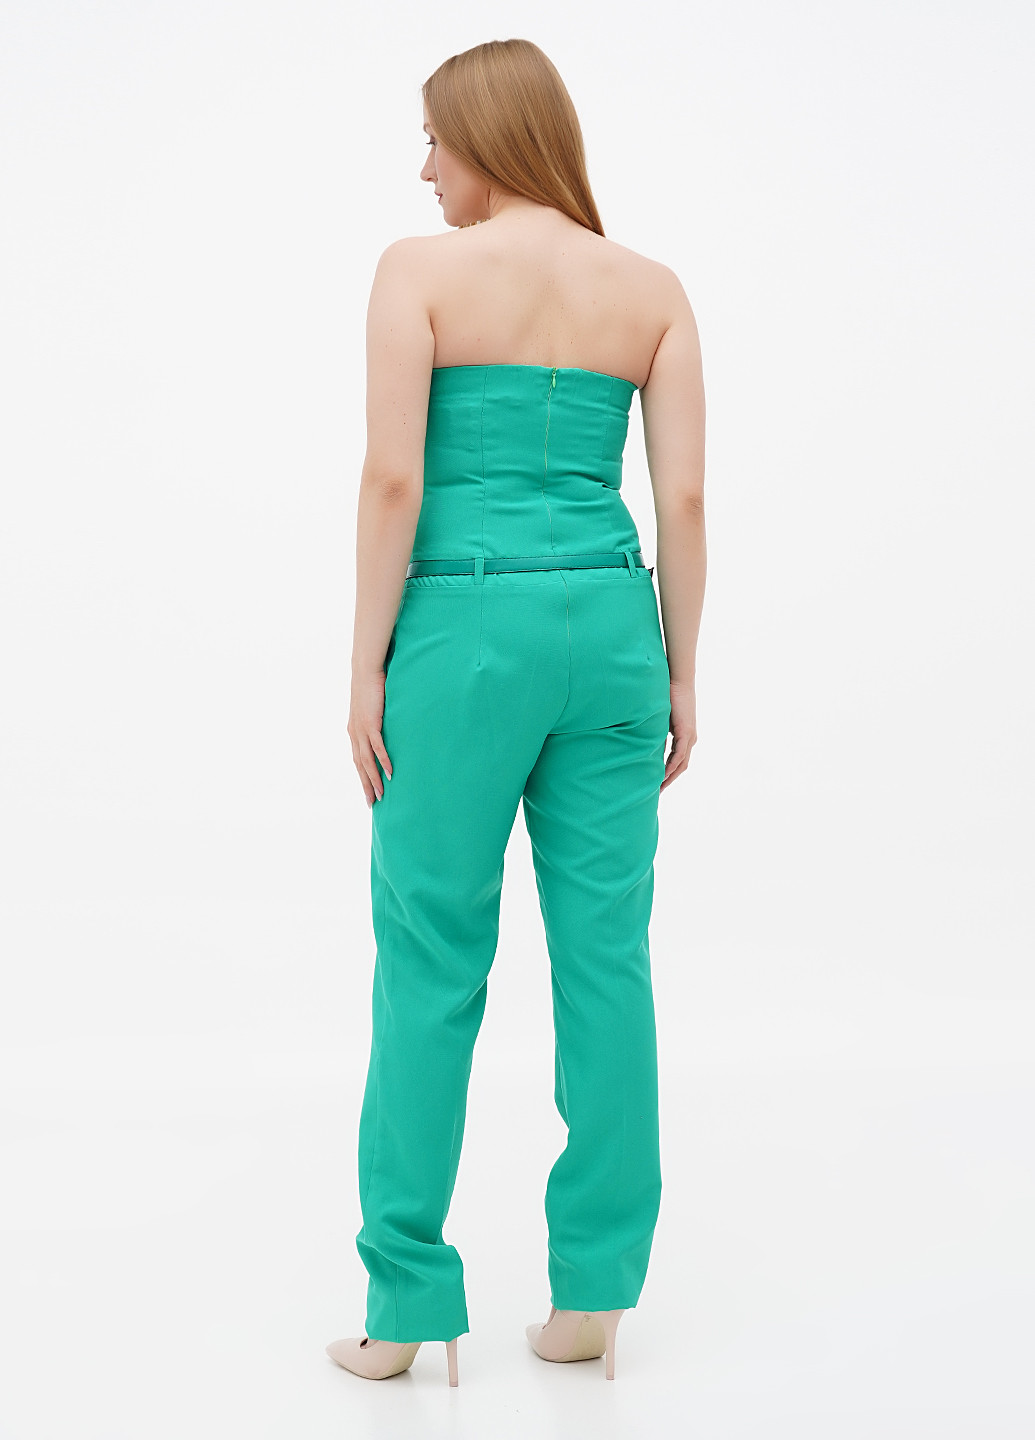 Комбинезон Maurini комбинезон-брюки однотонный светло-зелёный кэжуал хлопок, вискоза